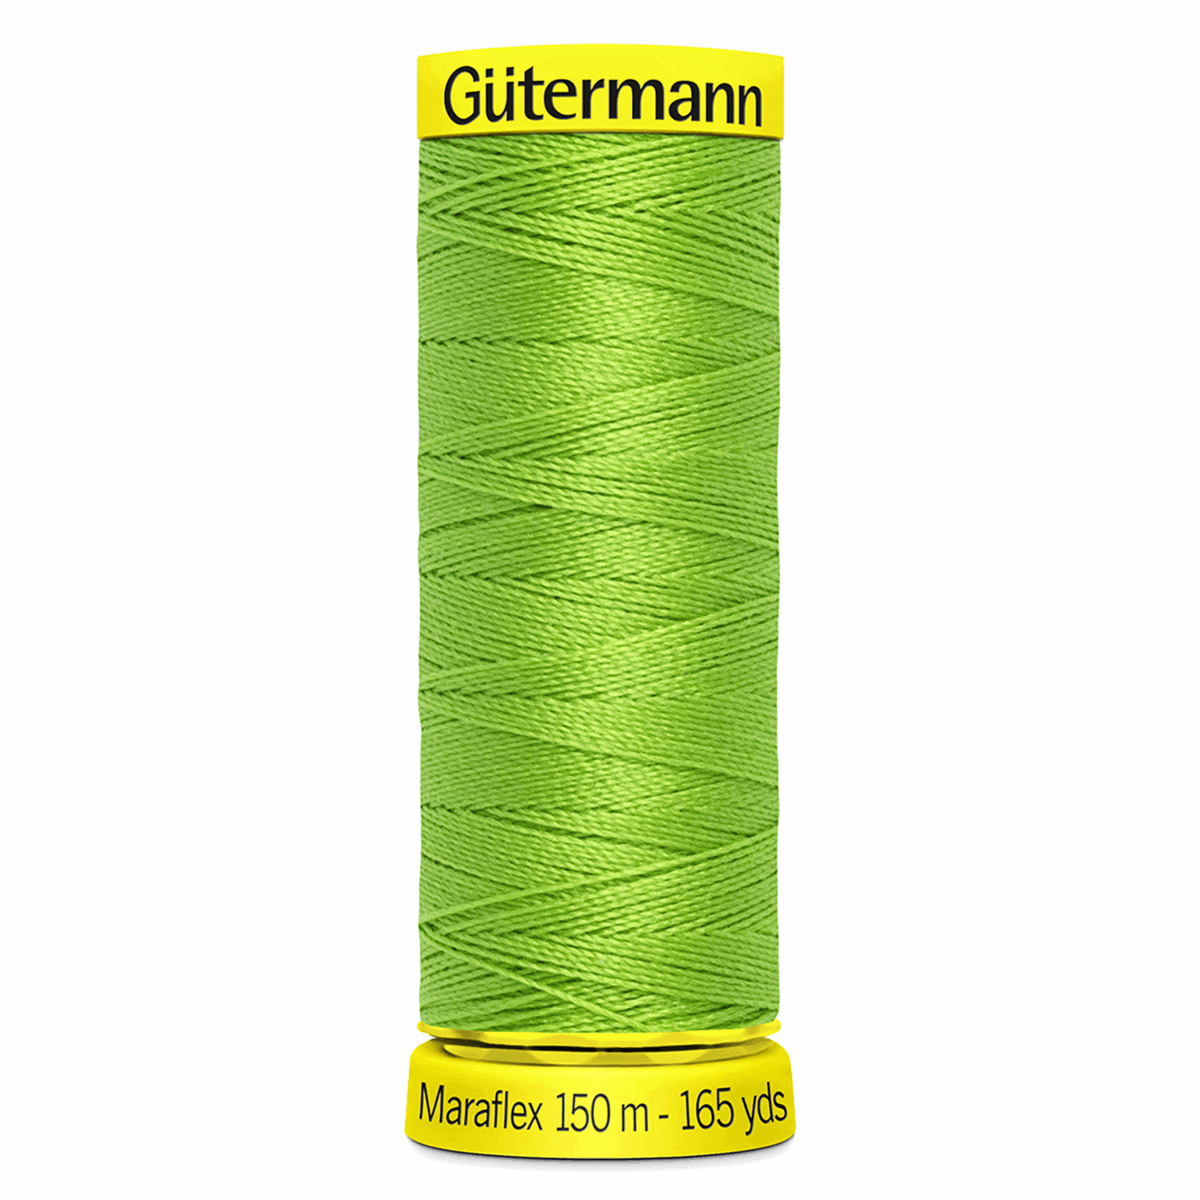 Gutermann Maraflex Elastic Sewing Thread 150m Chartreuse Green 336